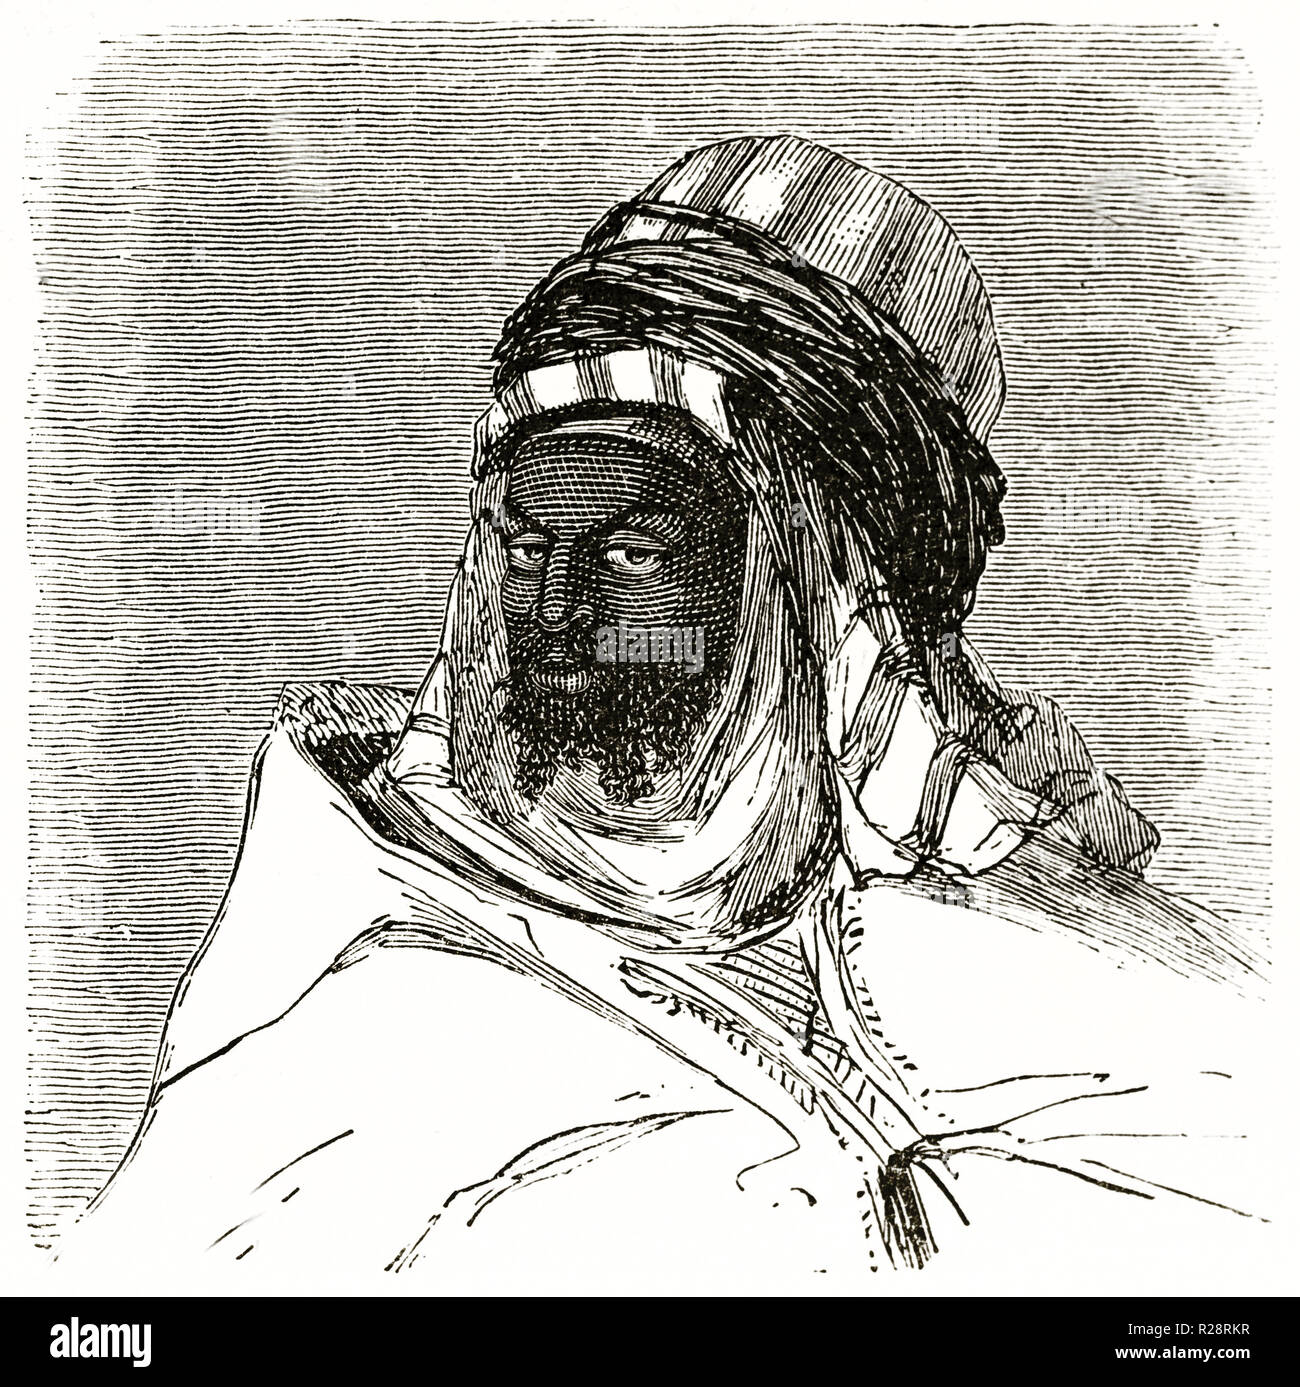 Vecchio ritratto inciso di Bahous-Ben-Babia, qaid di N'Goussa, Algeria. Da Lajolais, publ. in Le Tour du Monde, Parigi, 1863 Foto Stock